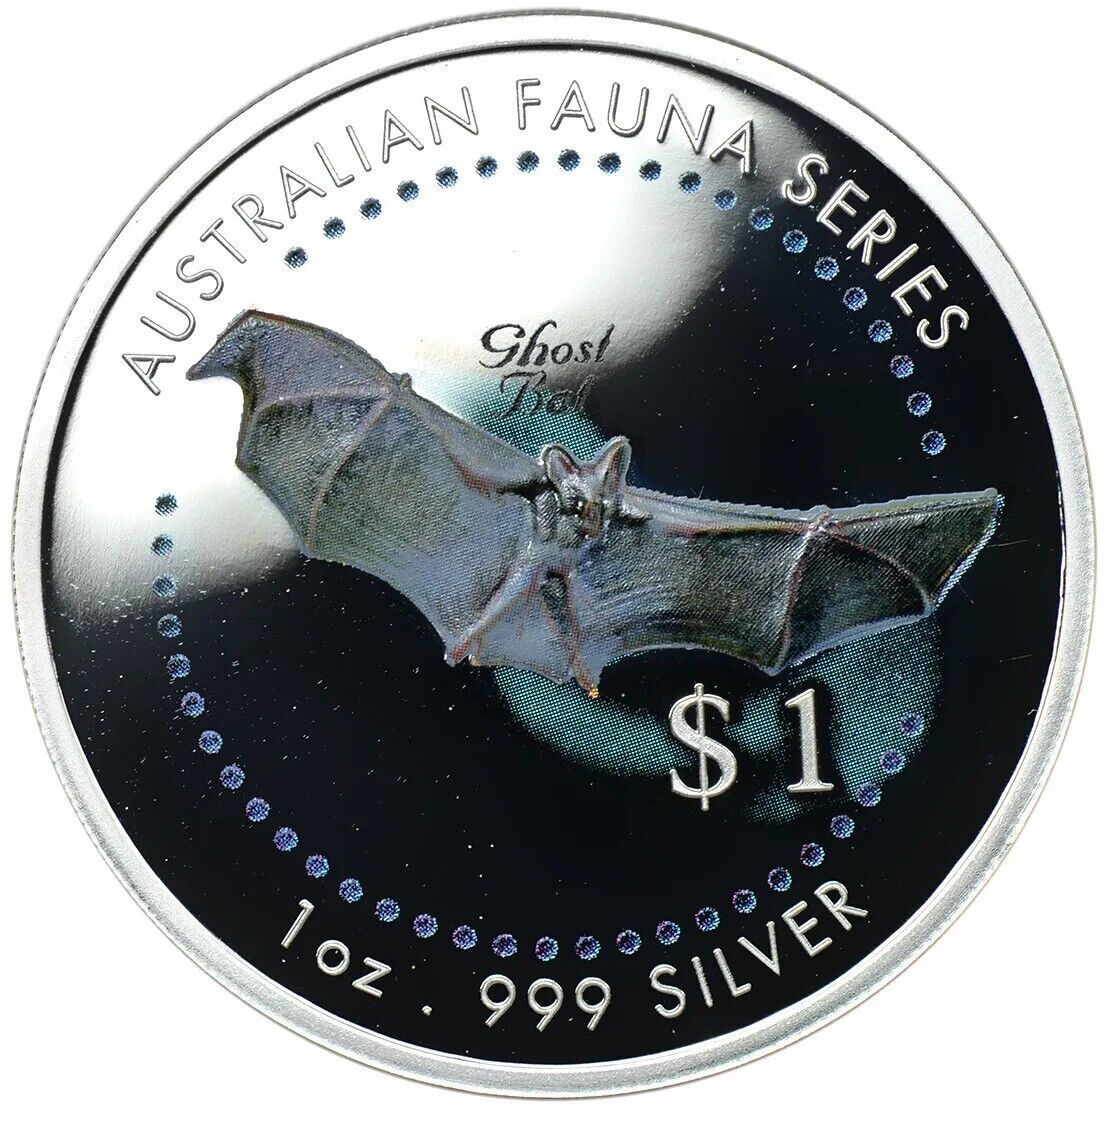 1 Oz Silver Coin 1998 Cook Islands $1 Australian Fauna Series Ghost Bat-classypw.com-1